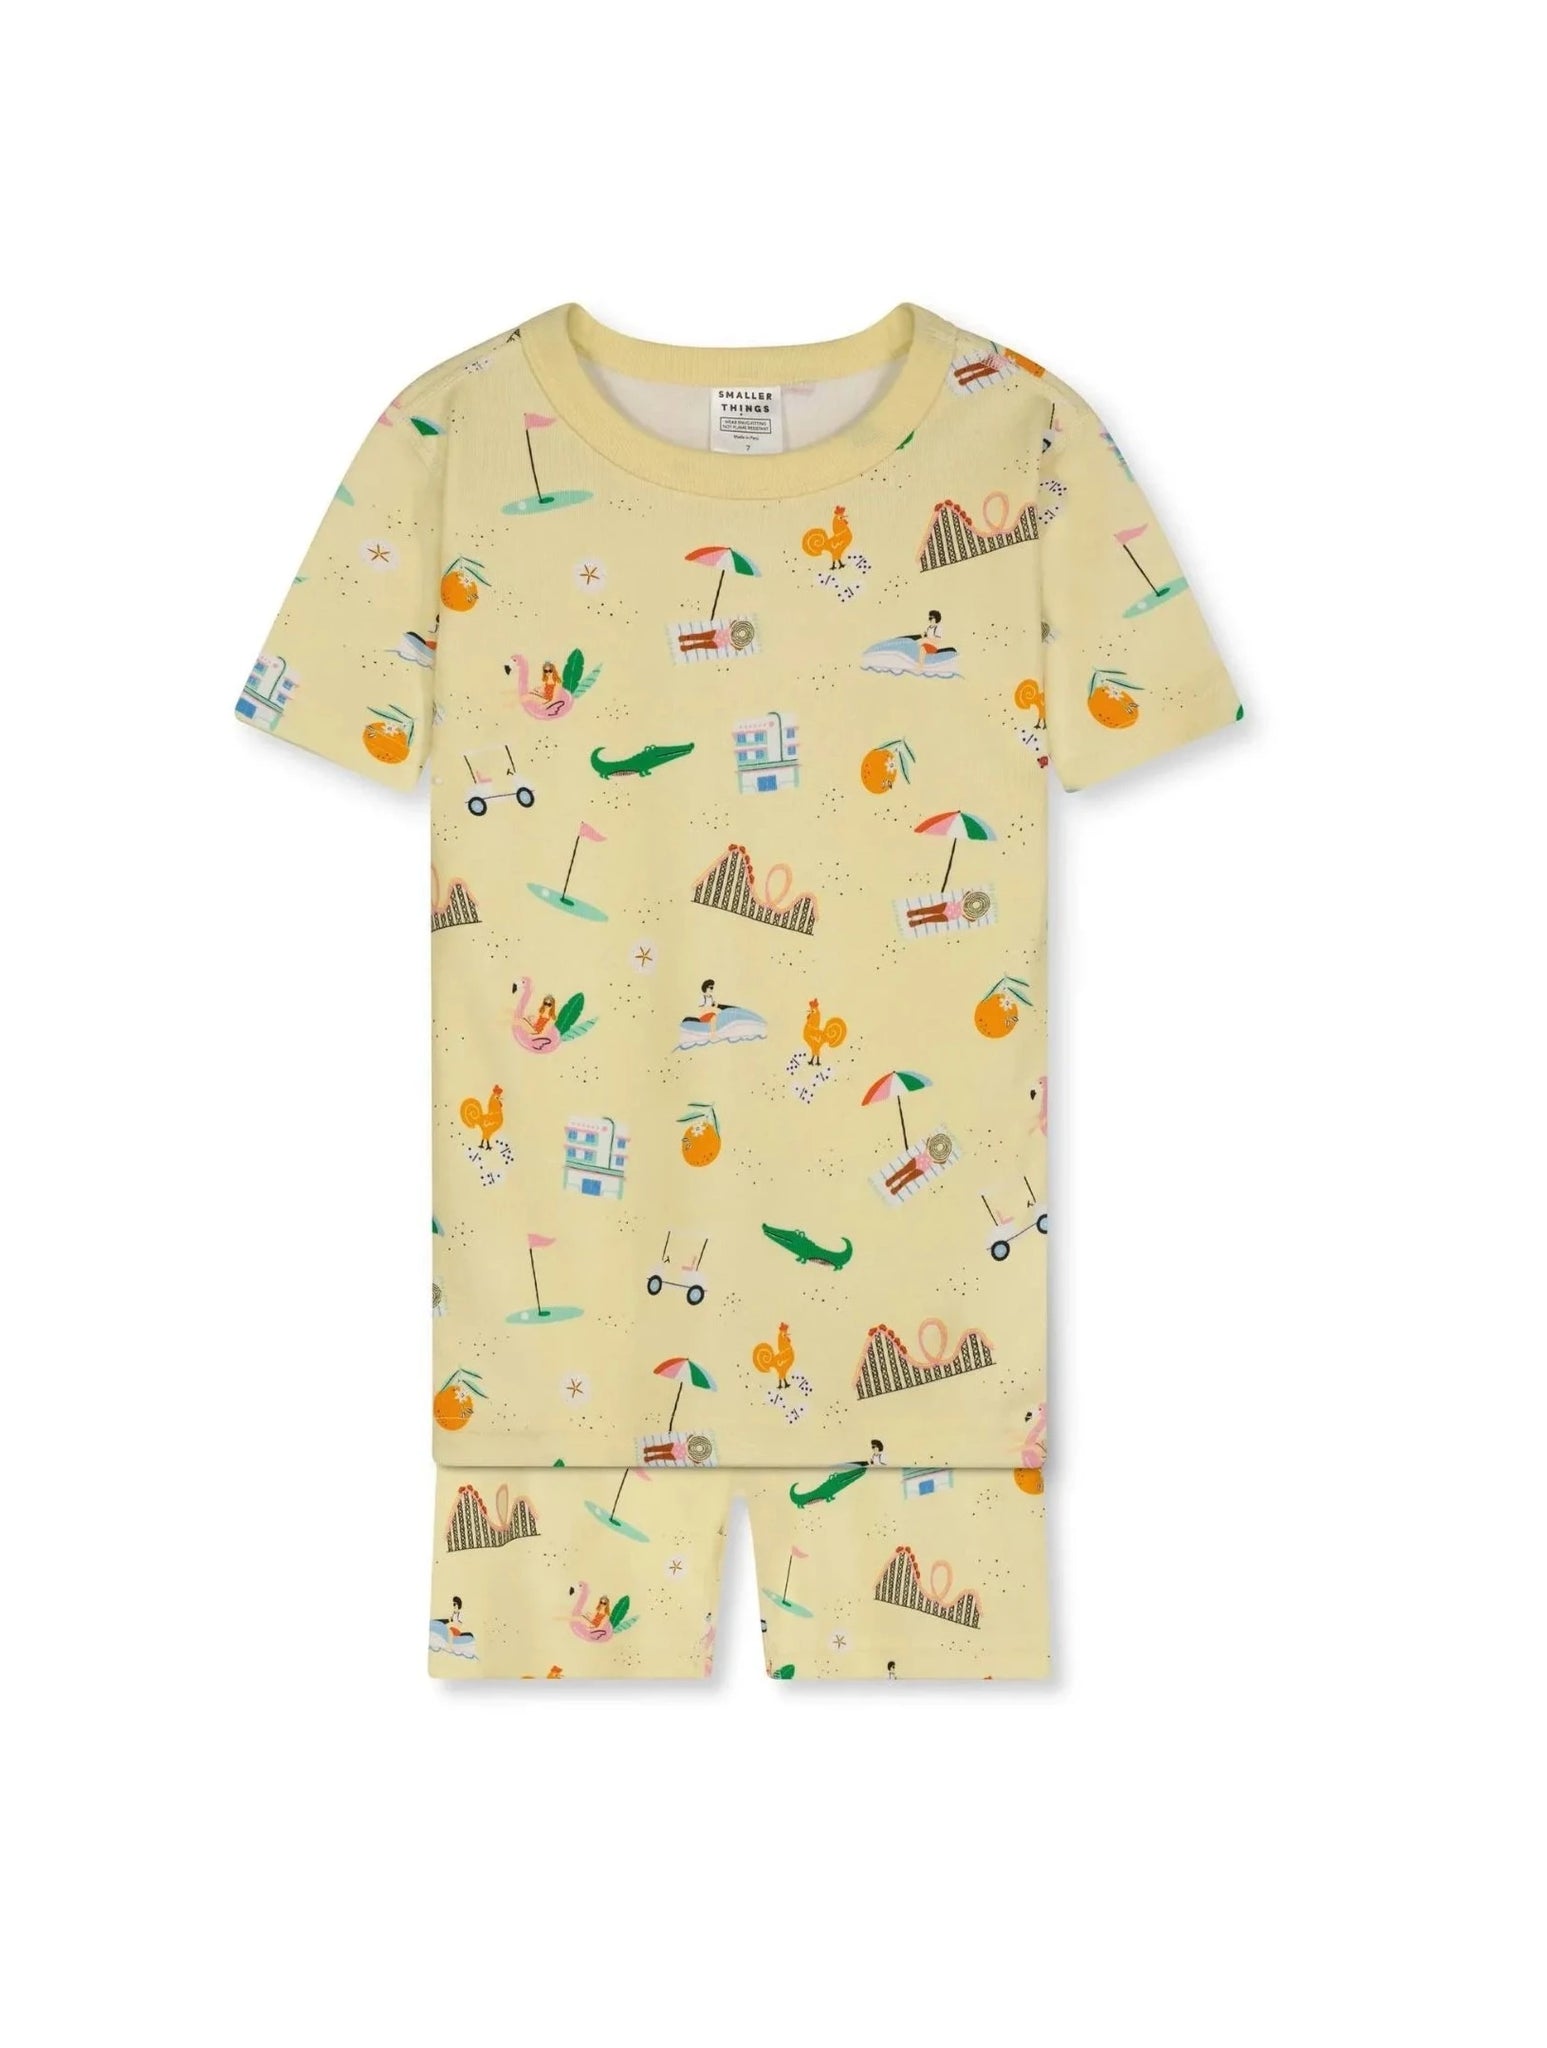 yellow short sleeve and short pajamas featuring Florida themed emblems